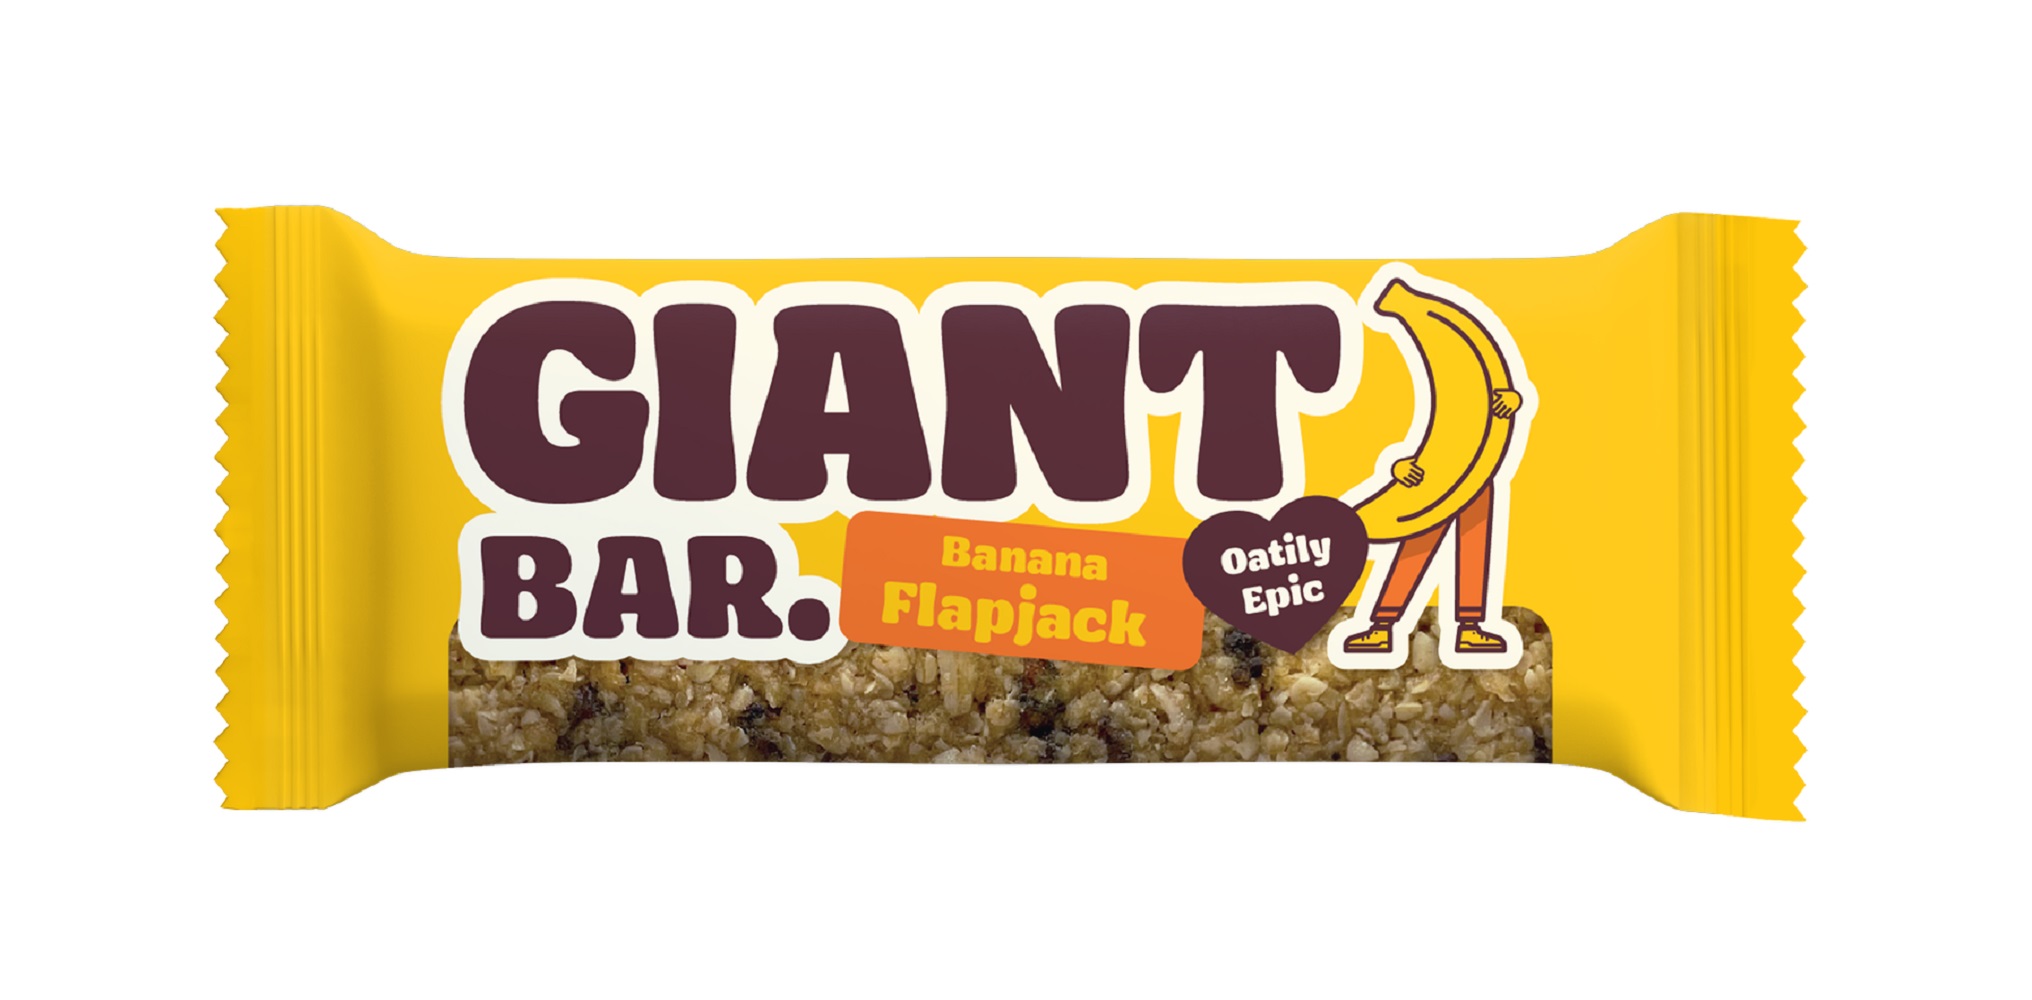 Giant Bar Banana